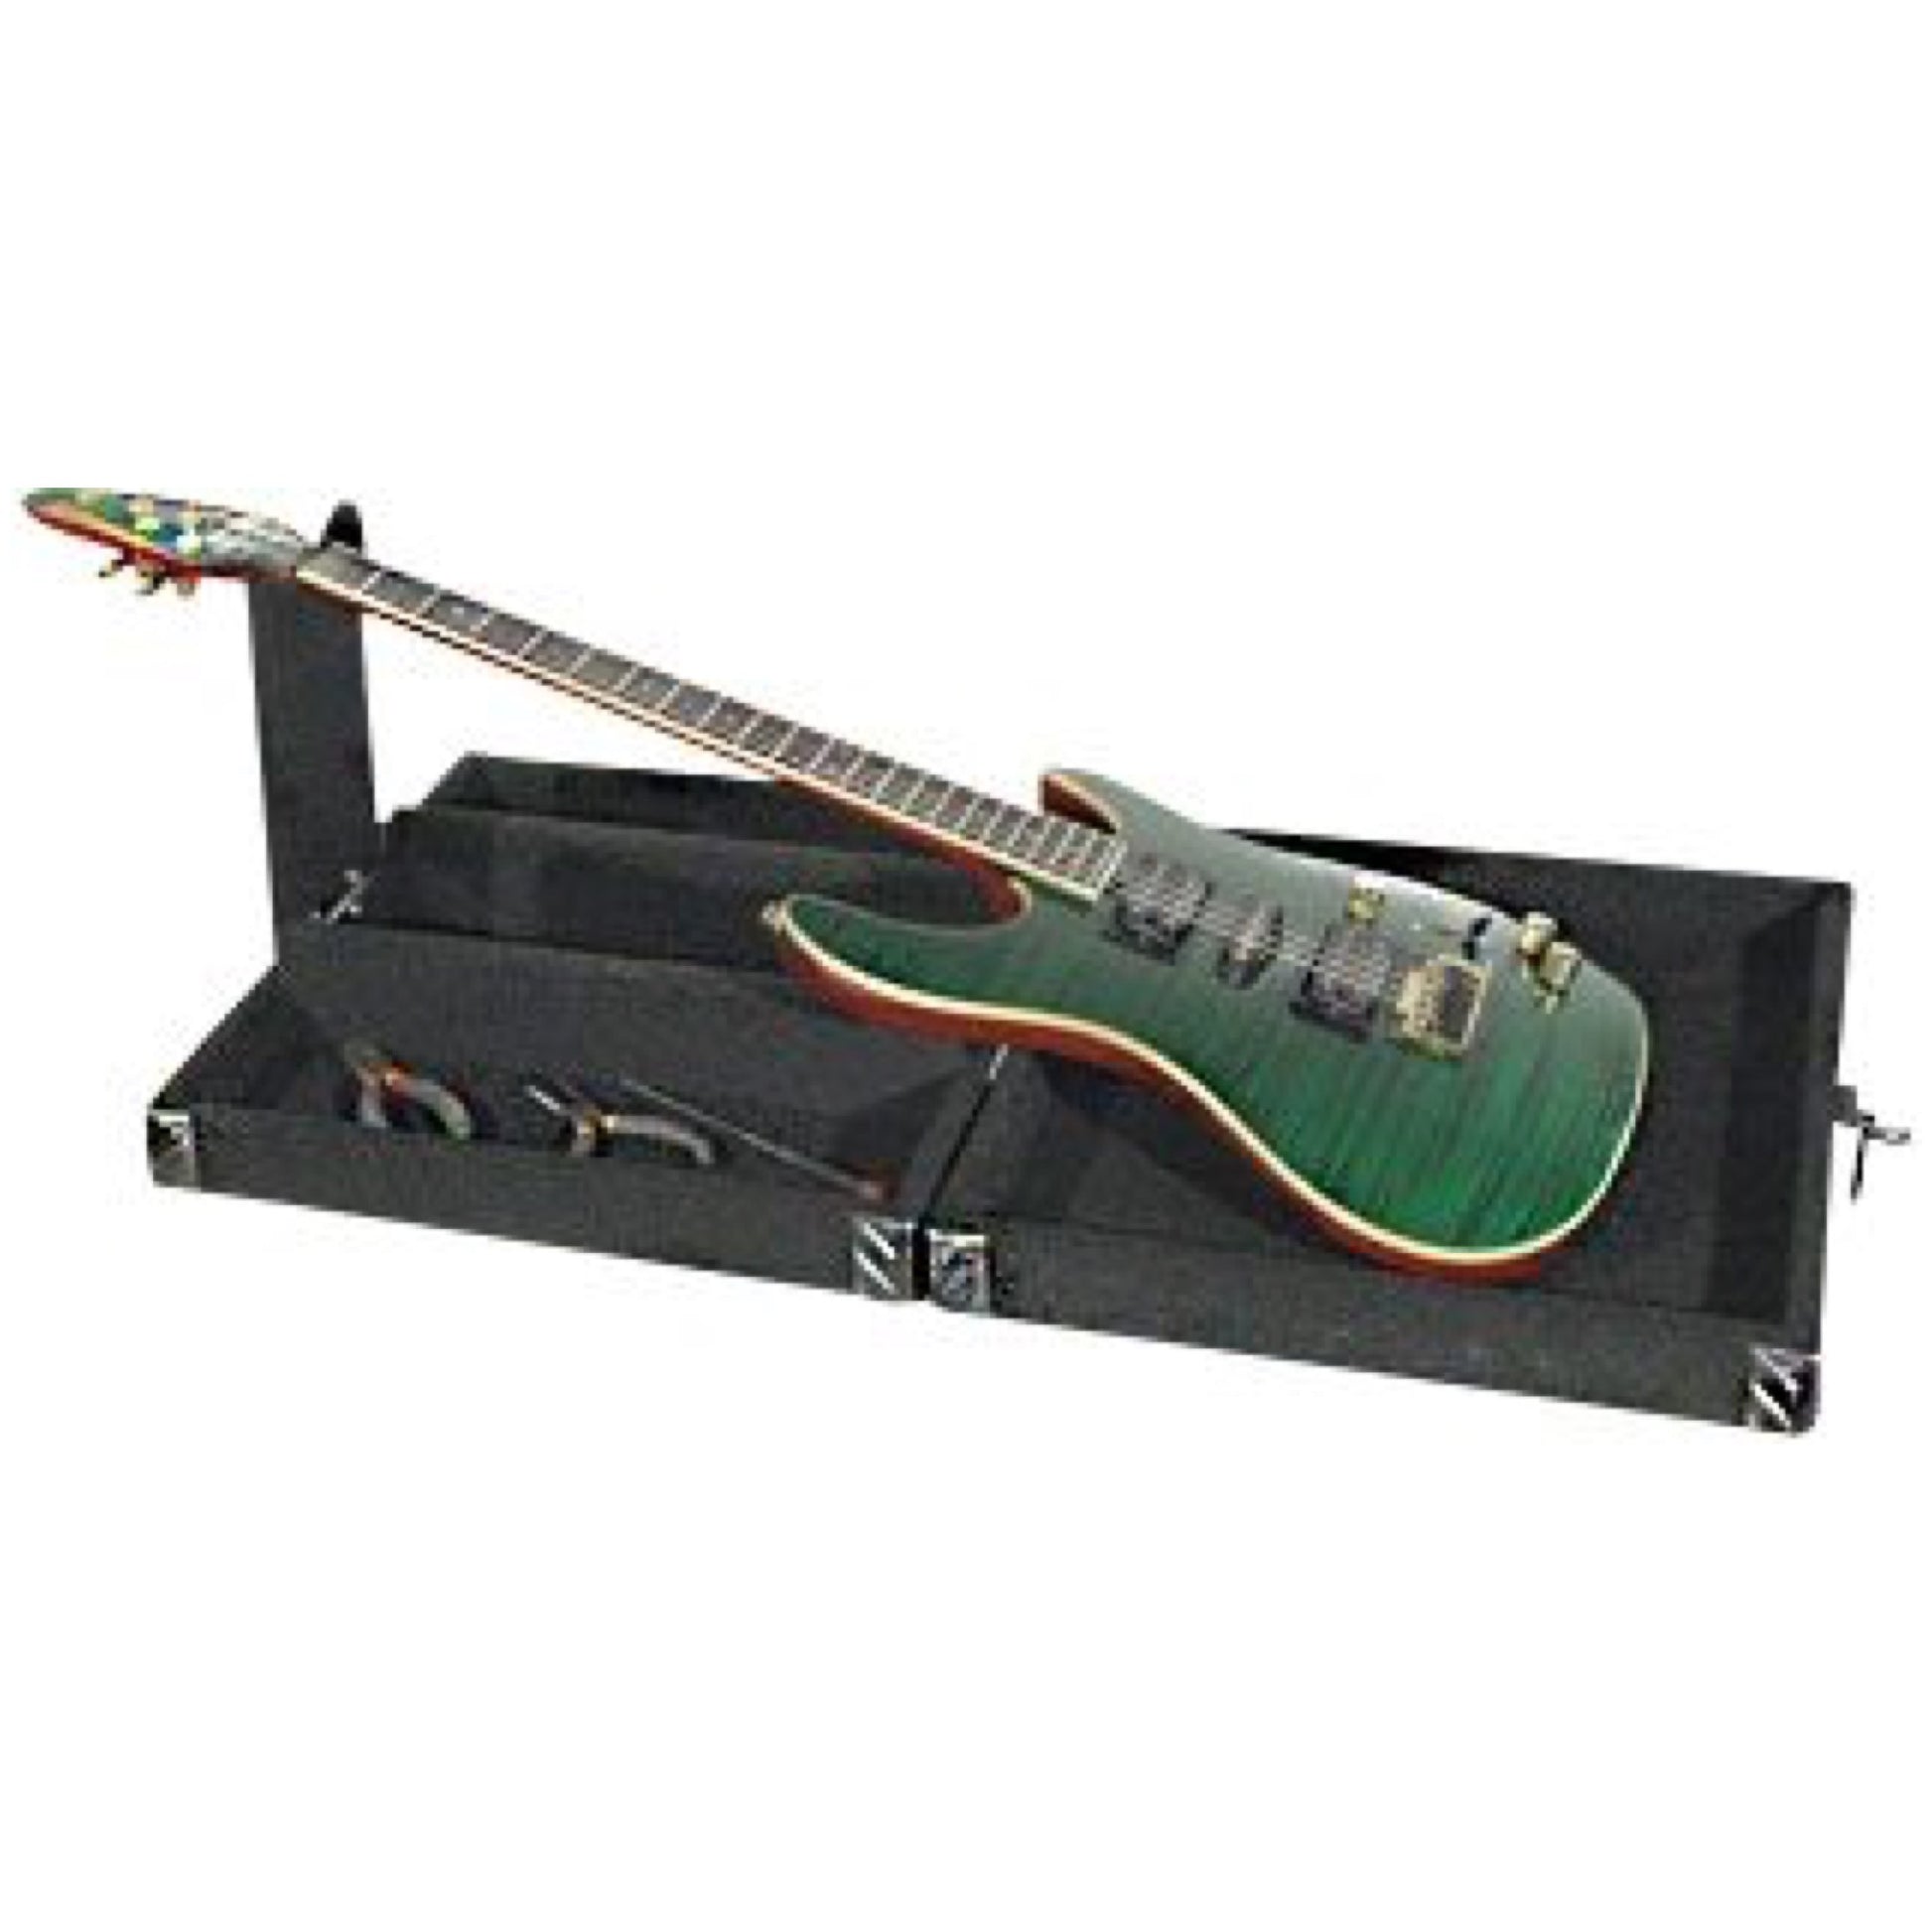 Grundorf GMT-003 Guitar Maintenance Table